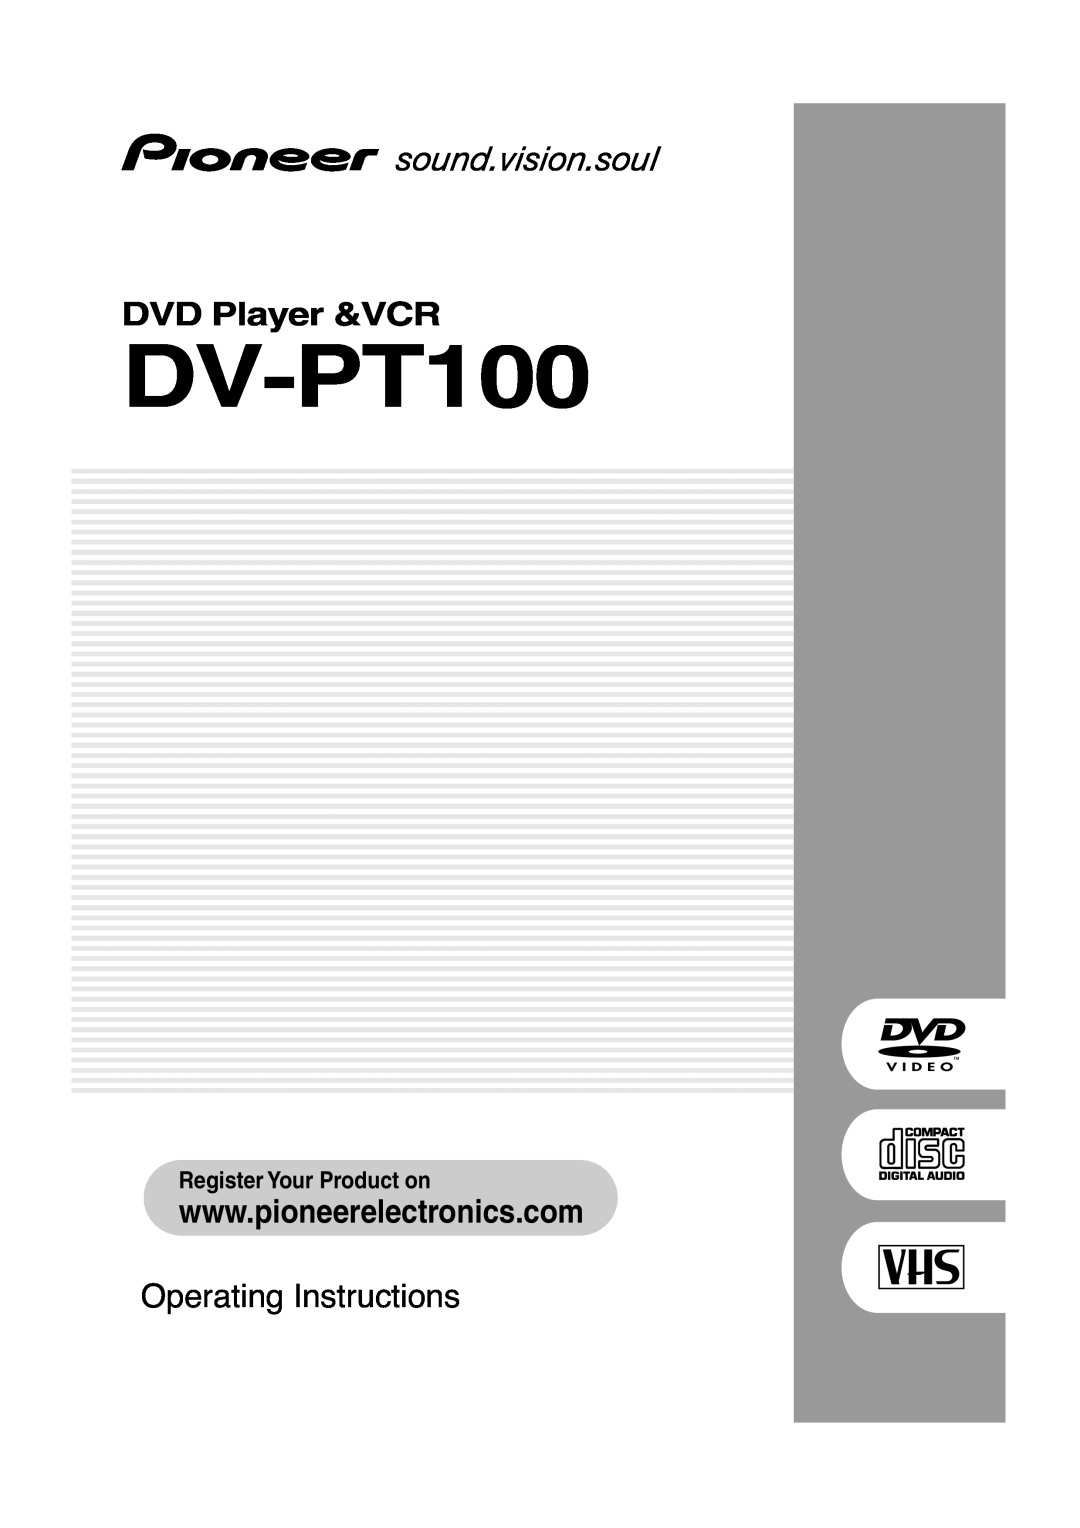 Pioneer DV-PT100 operating instructions DVD Player &VCR, Operating Instructions, Register Your Product on 